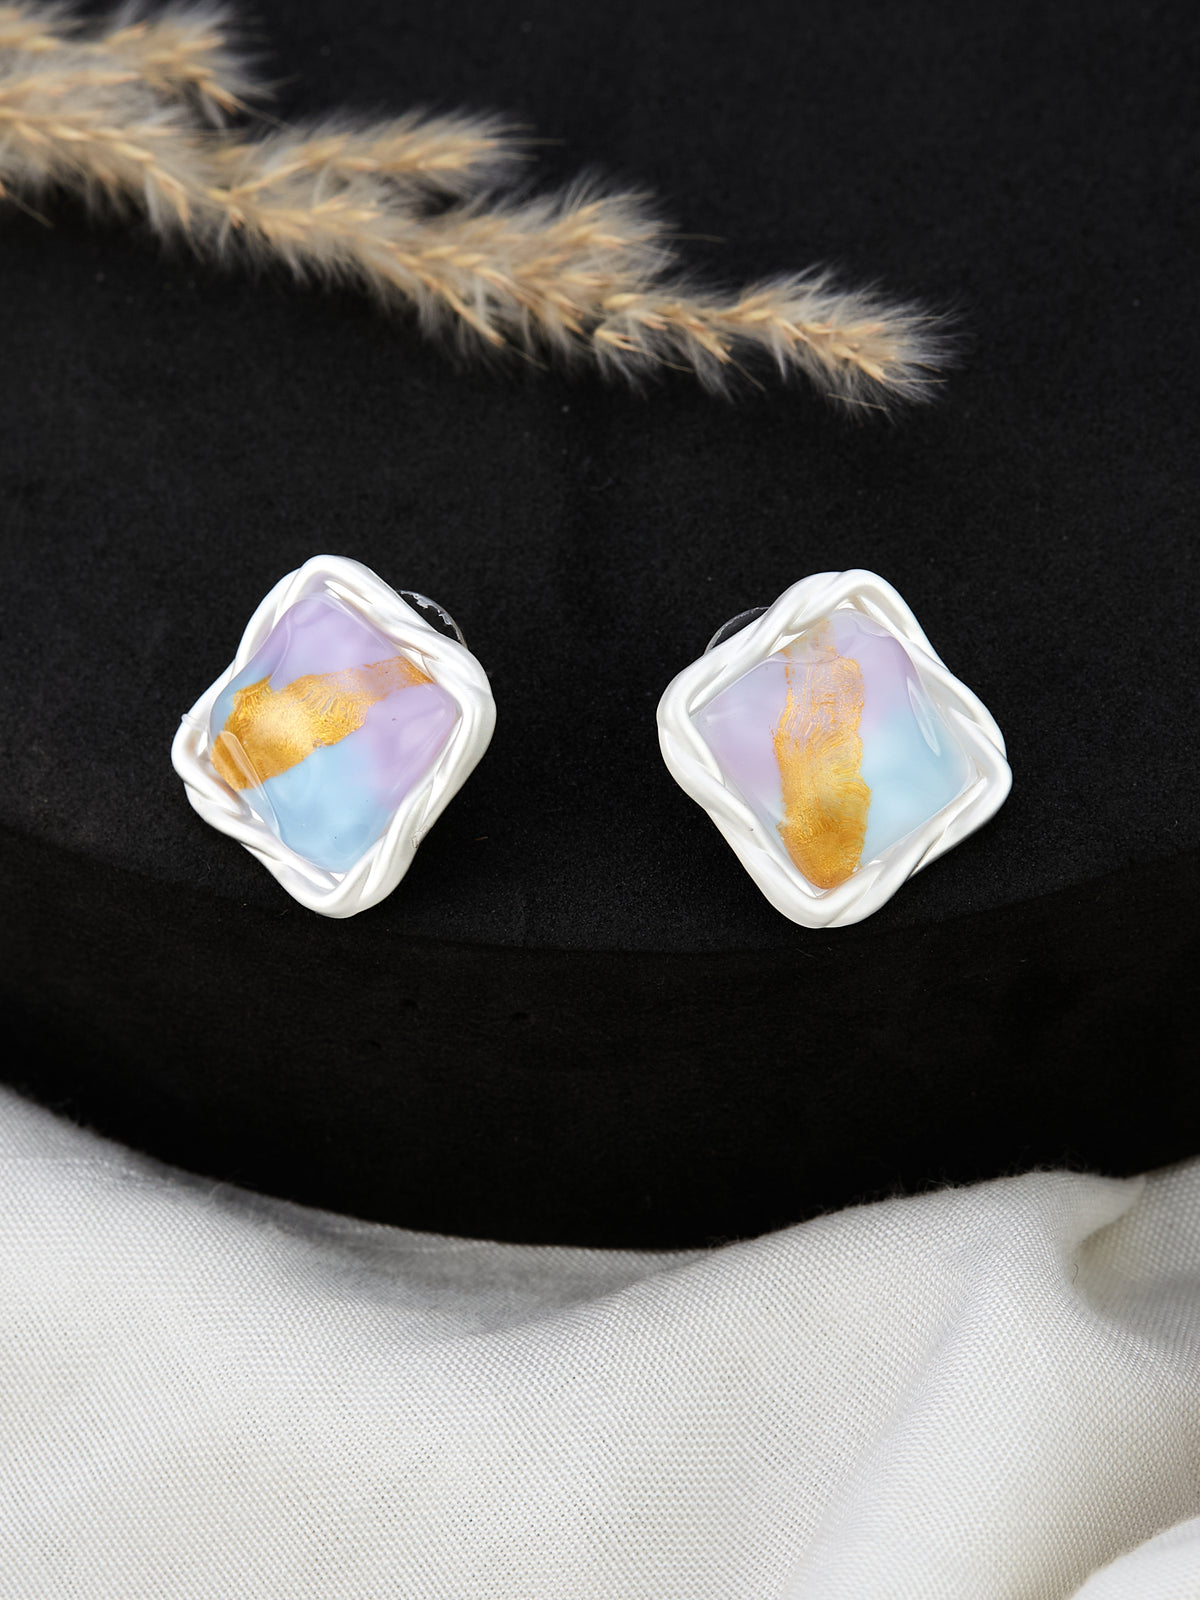 Multicolor Stud Earrings for women & girls